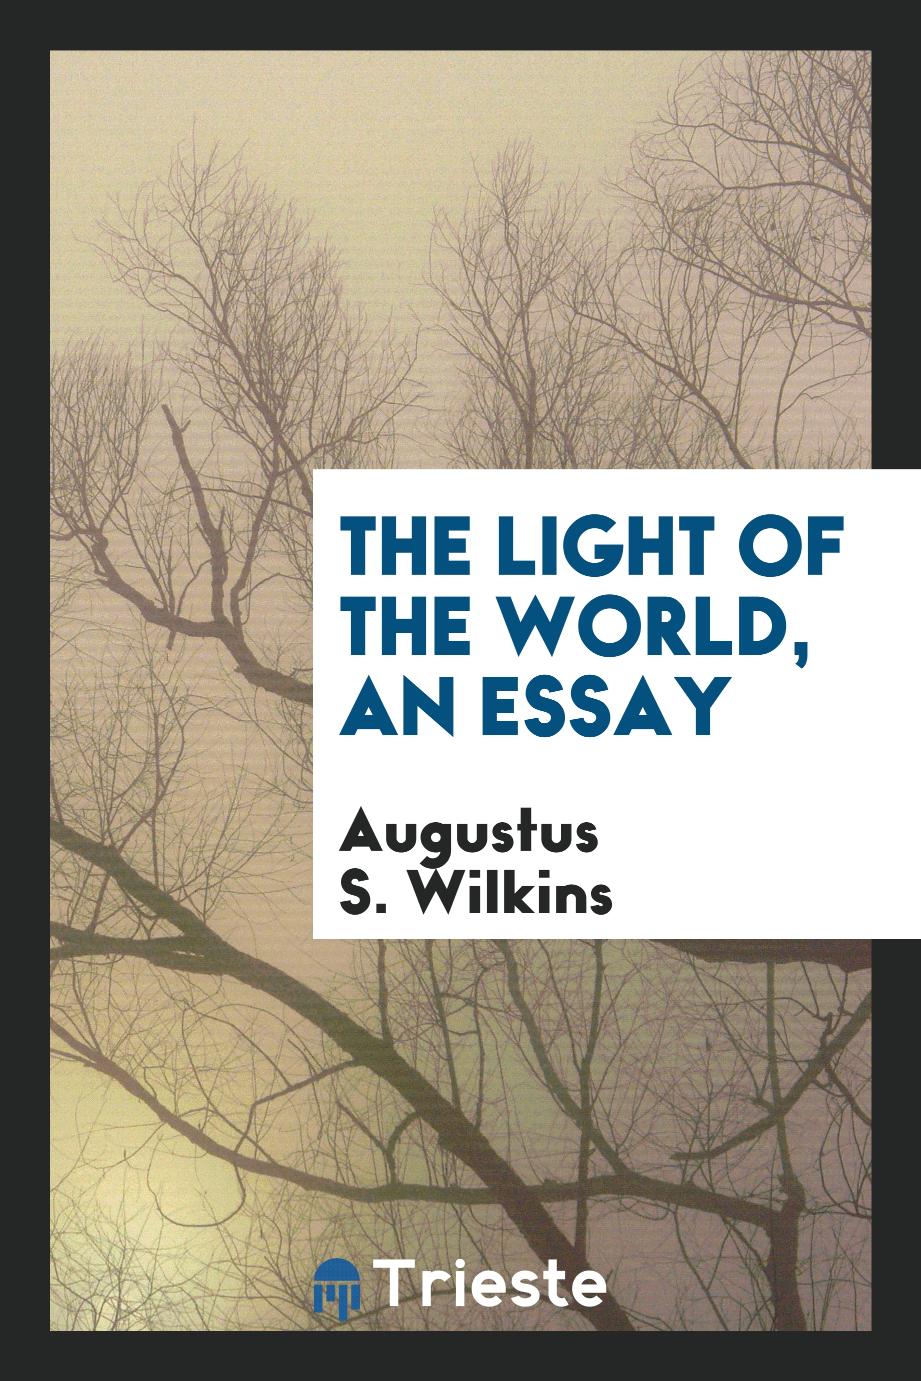 The Light of the world, an essay